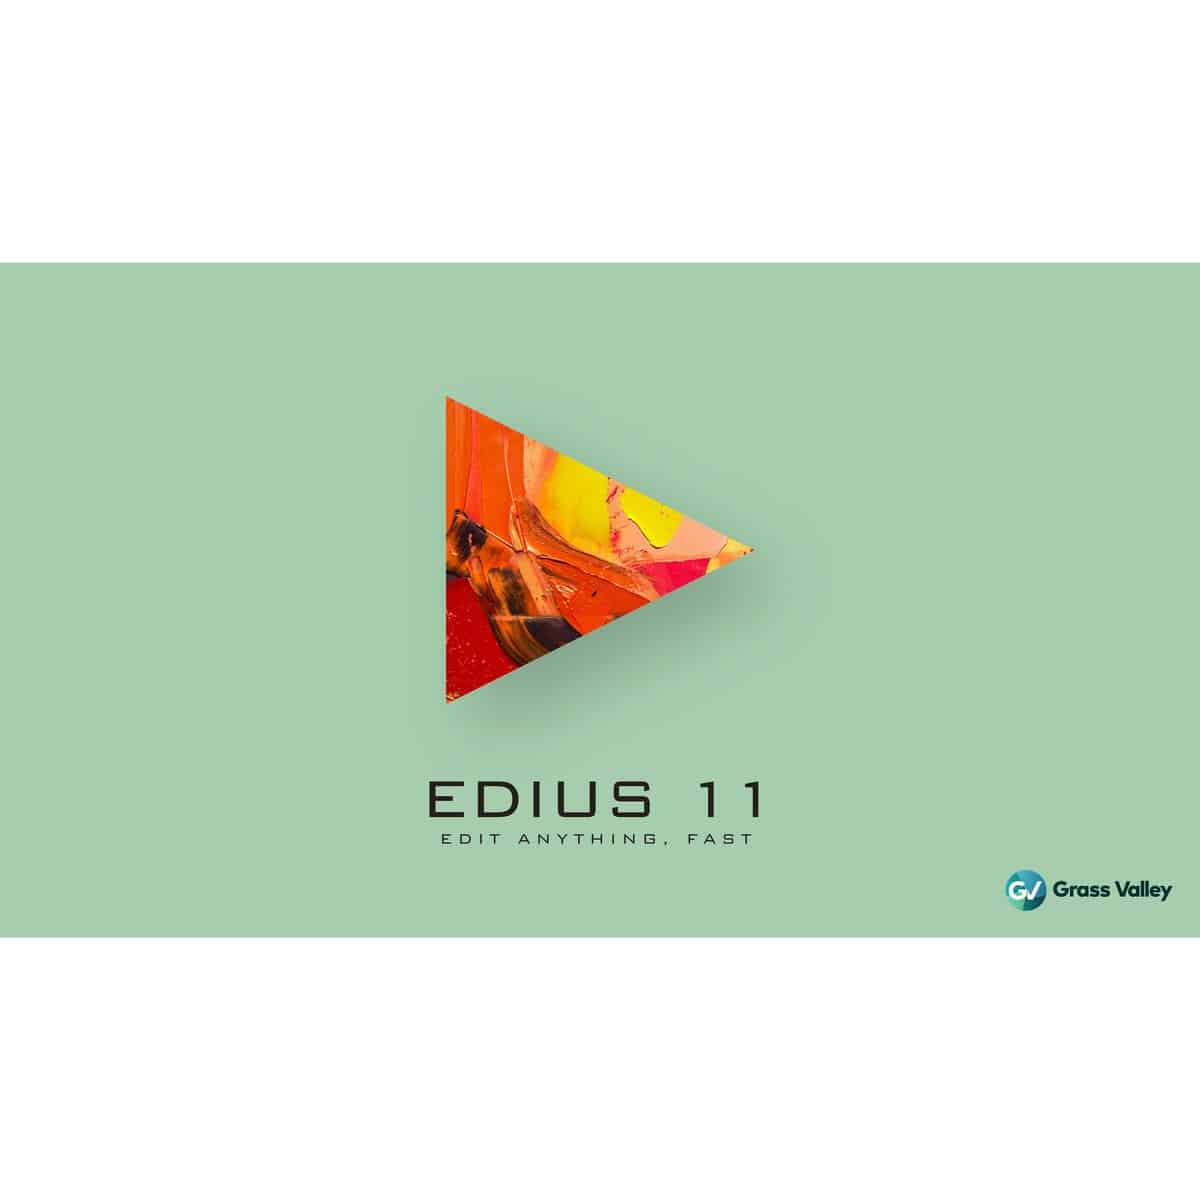 EDIUS 11 Workgroup Video Editing Software Jump Upgrade from EDIUS 2-9, EDIUS X/11 Pro, Download Only